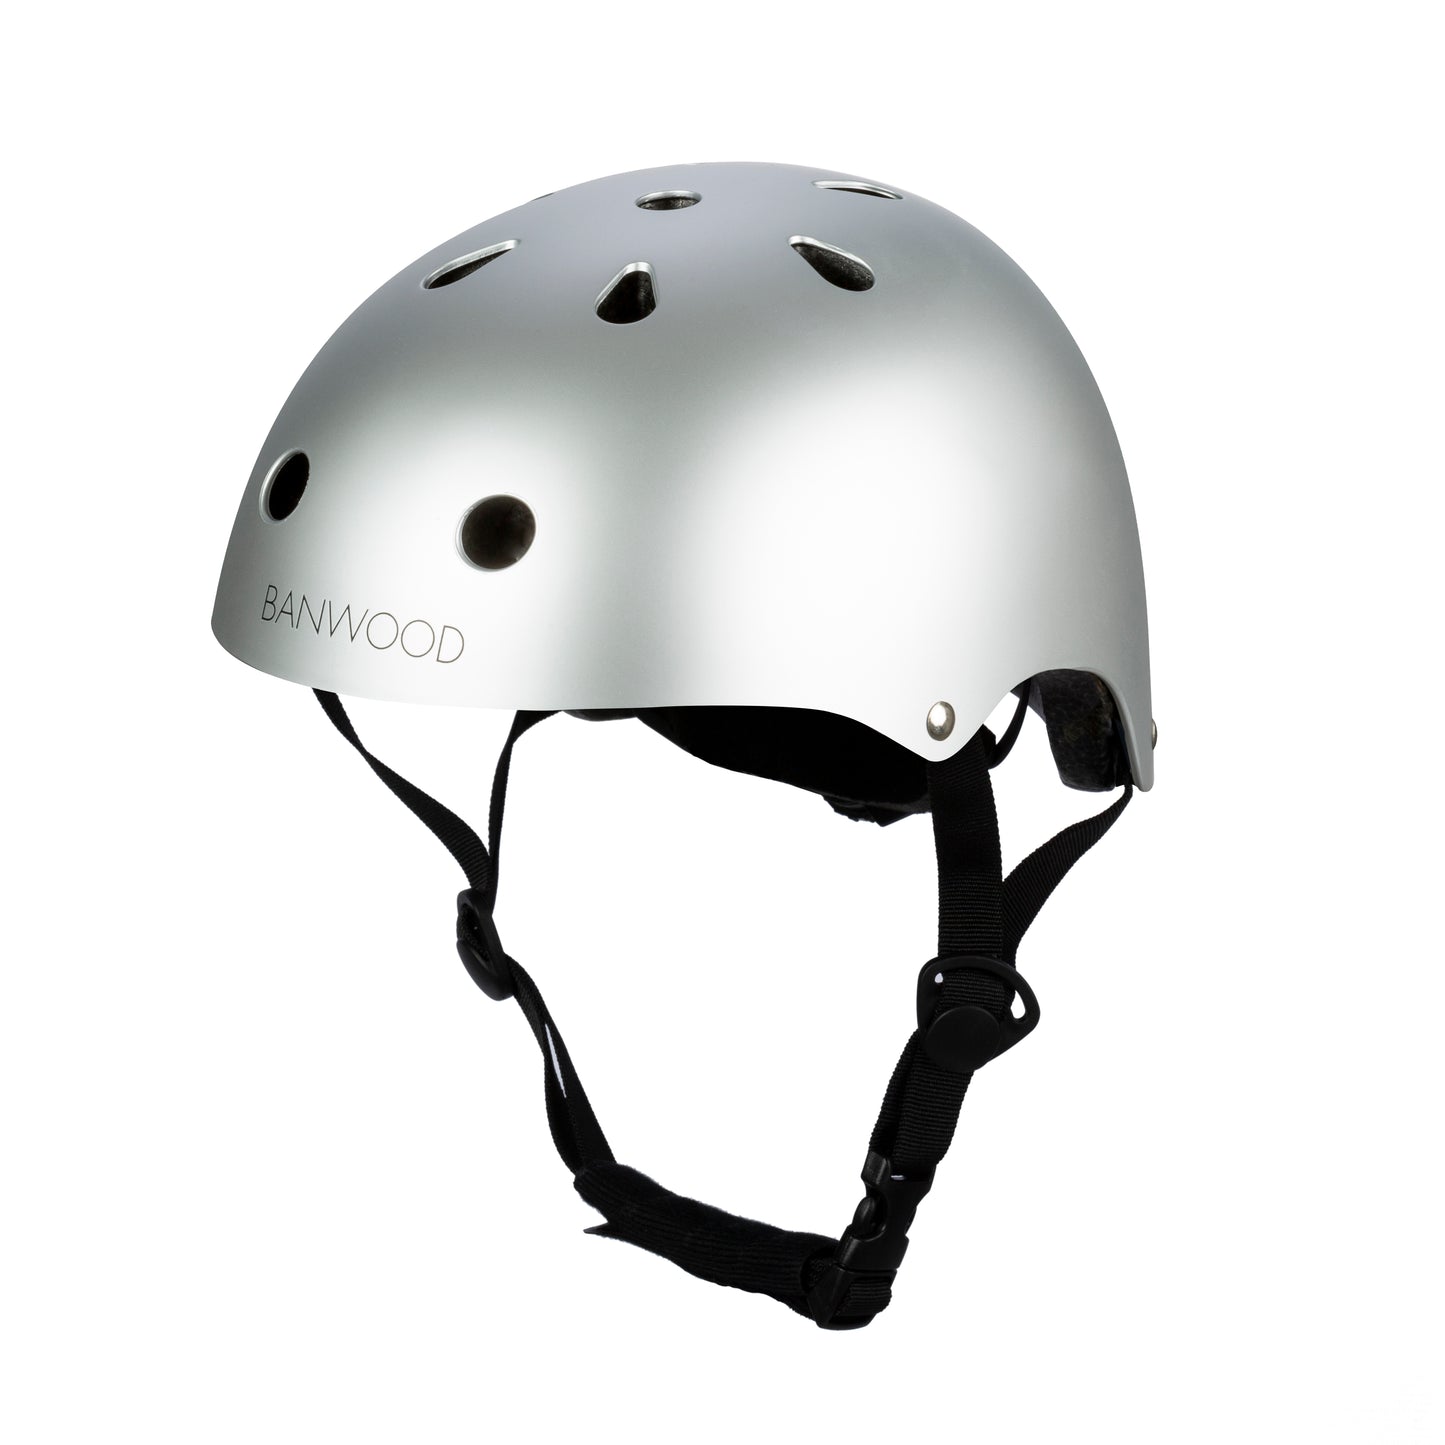 Banwood Helmet - Age 3-7 [48-52cm]